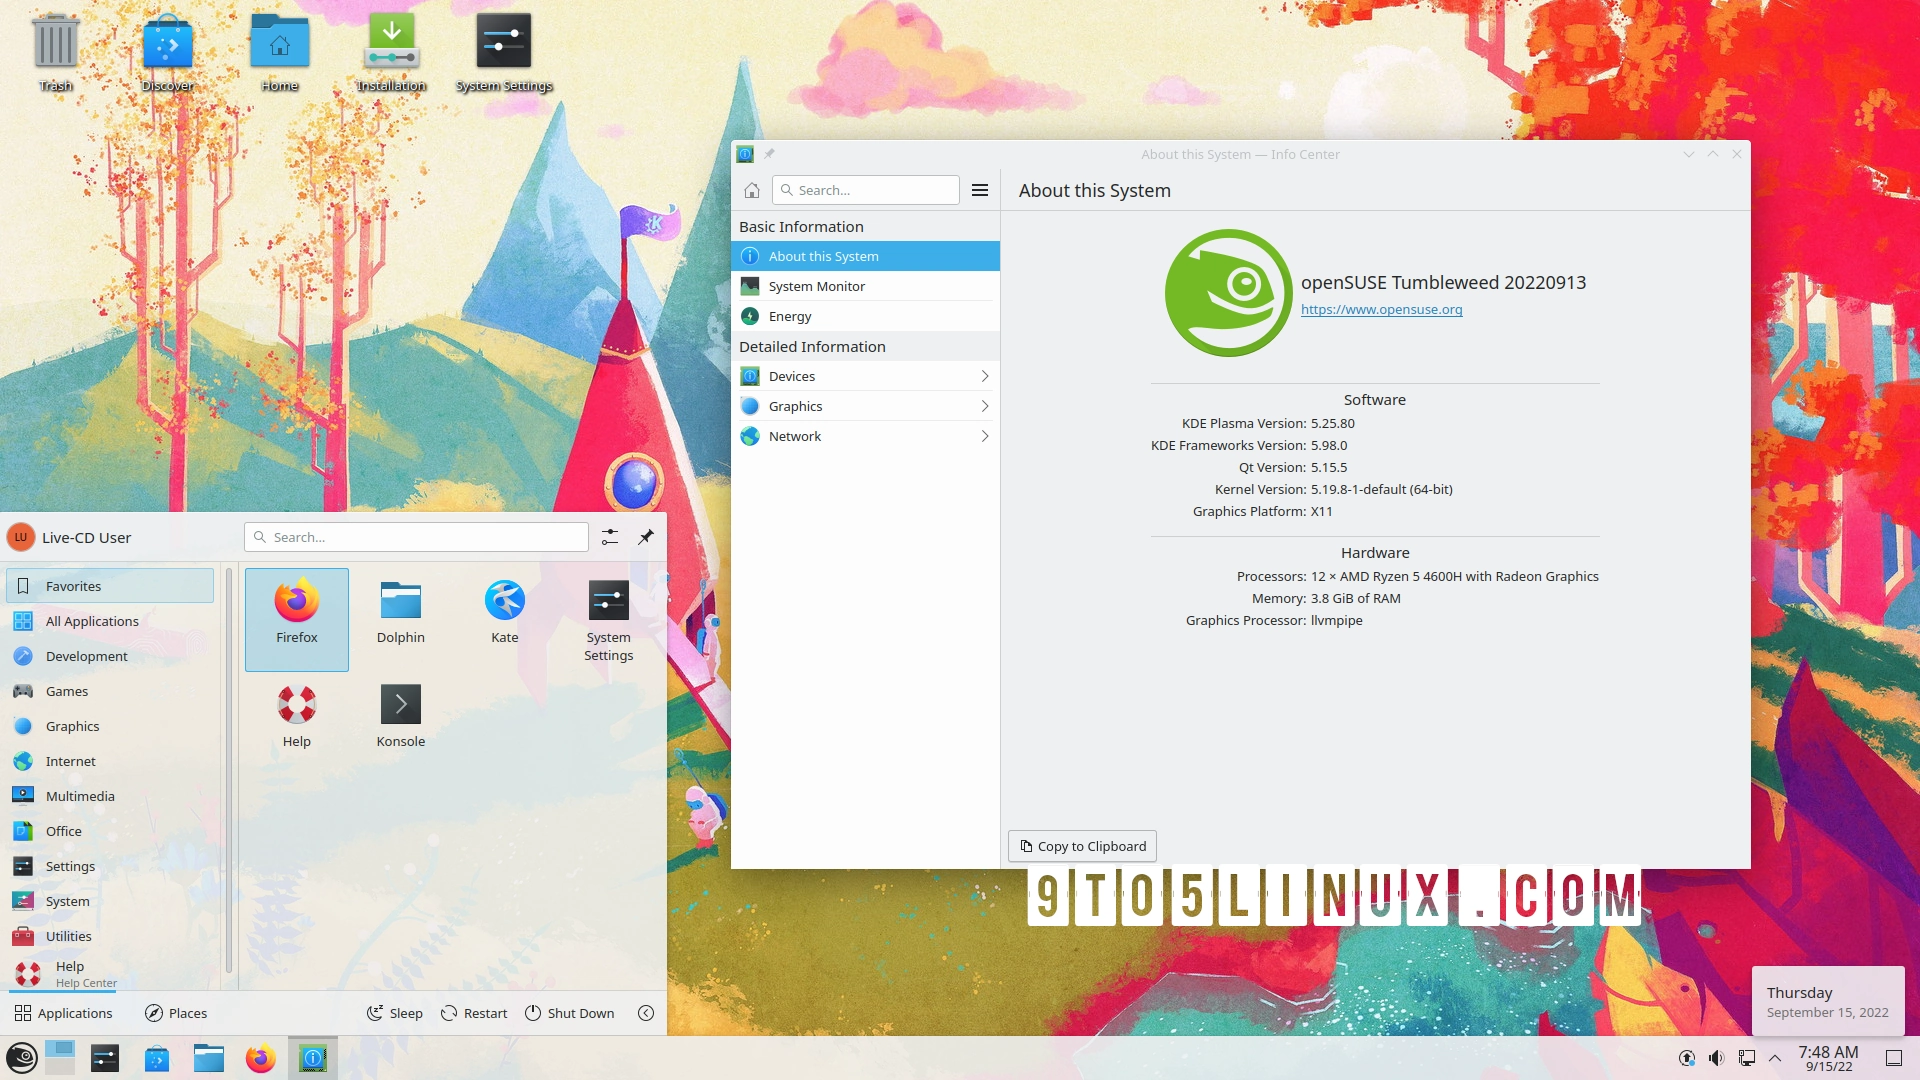 KDE Plasma 5.26 Desktop Environment Enters Public Beta Testing, Here’s What’s New